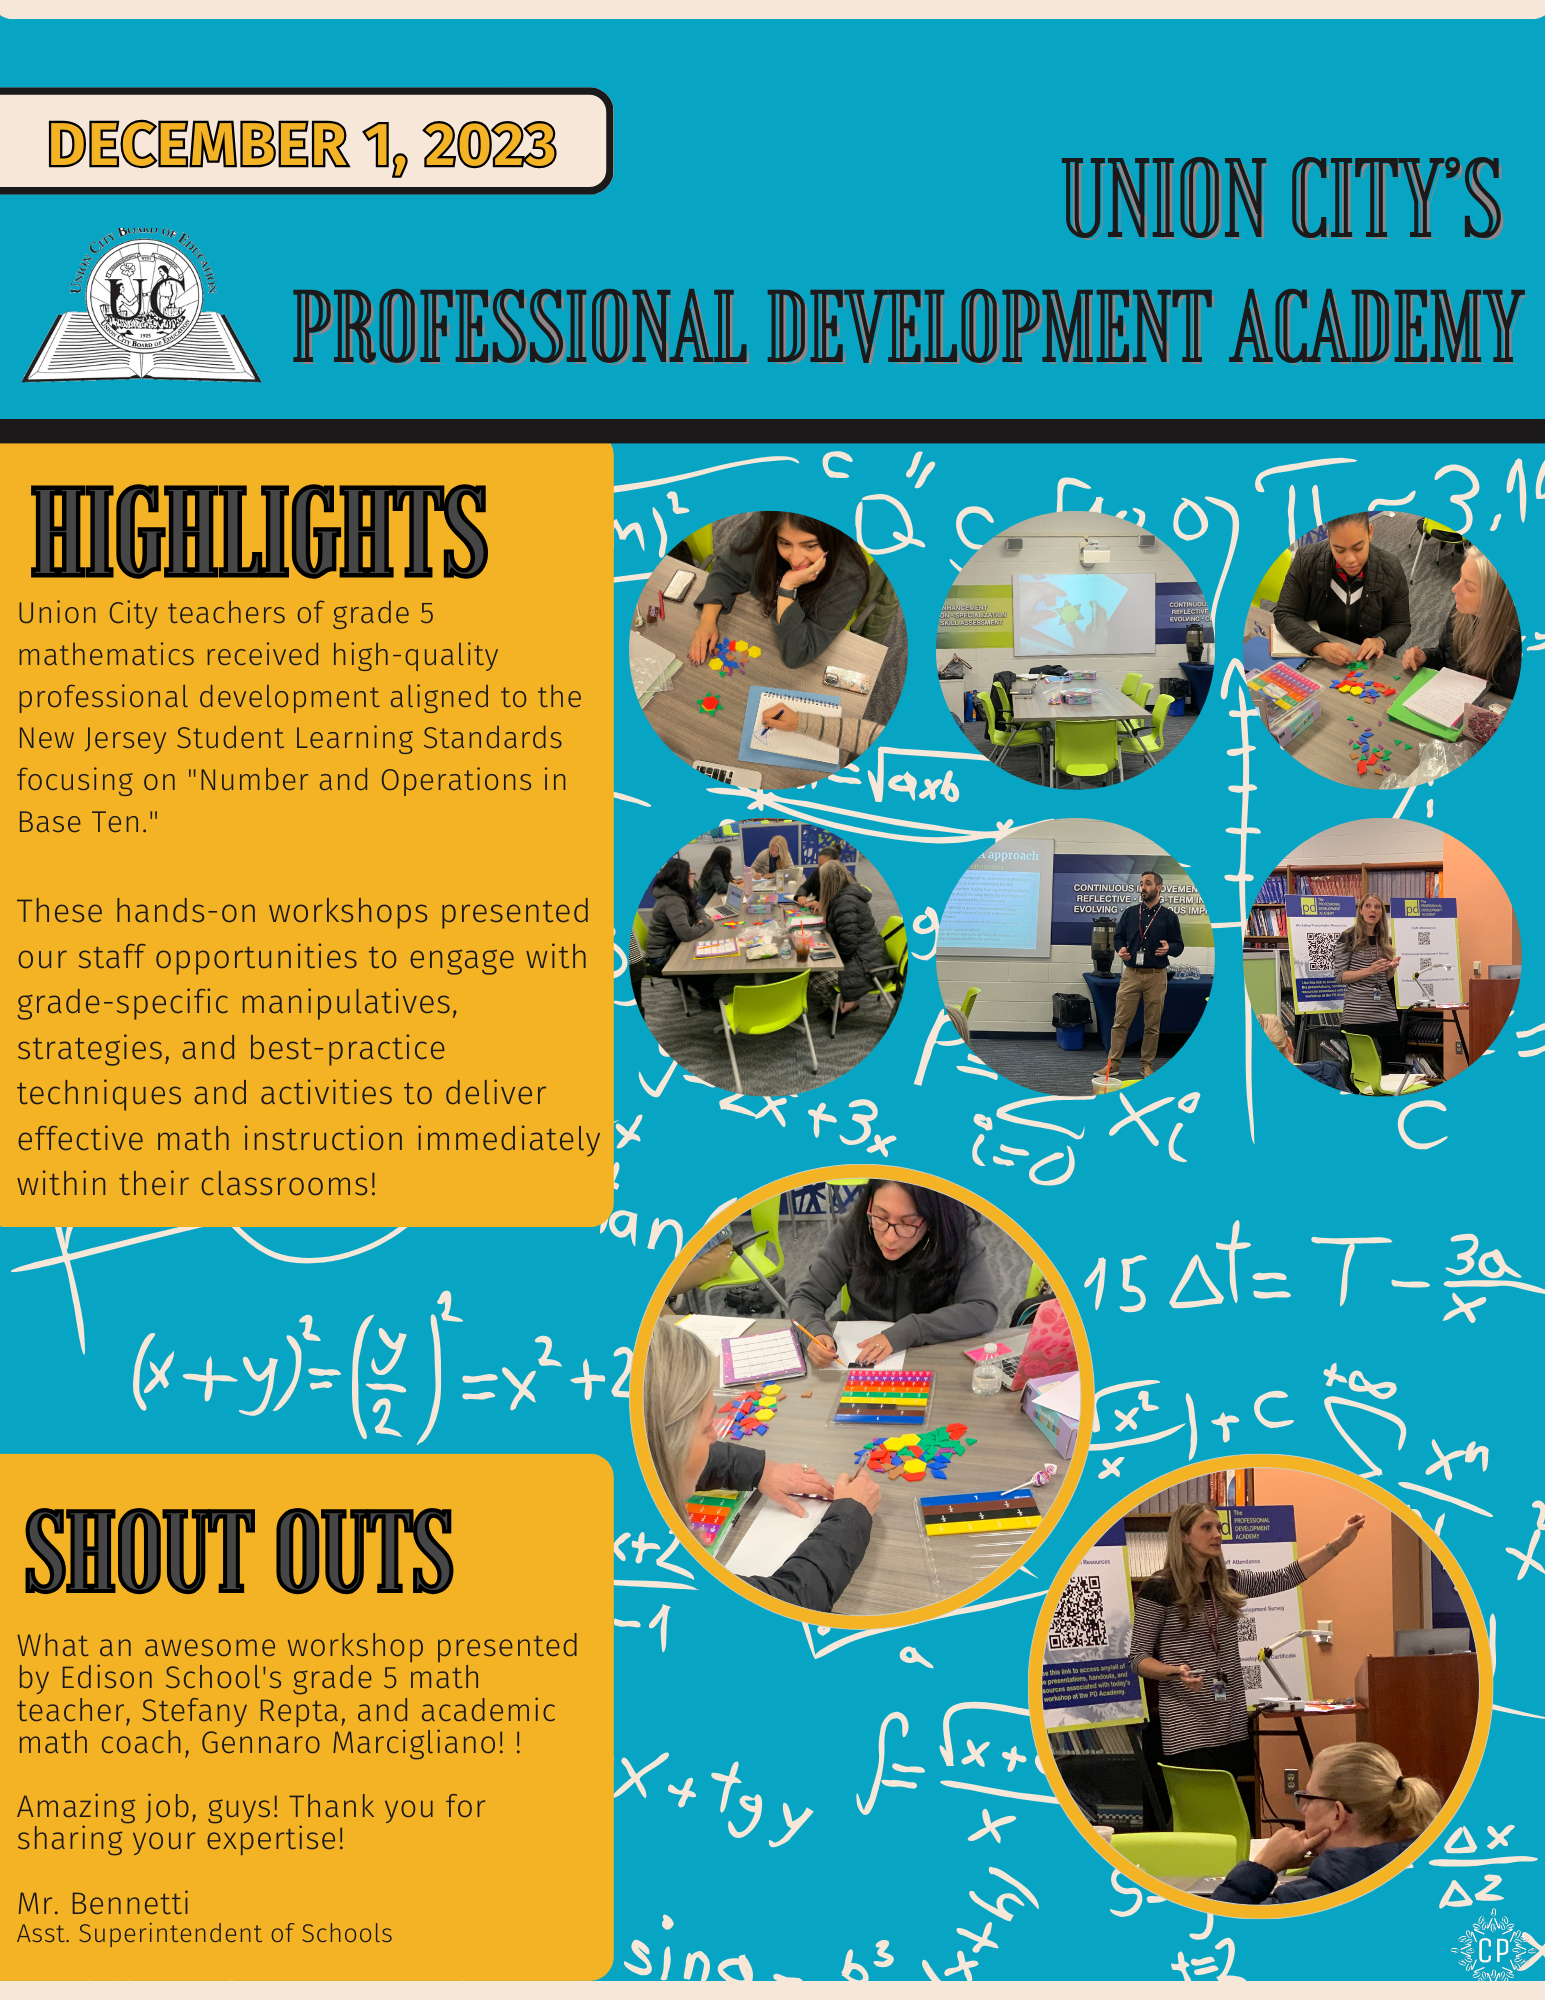 The Union City Professional Development Academy-December 1, 2023